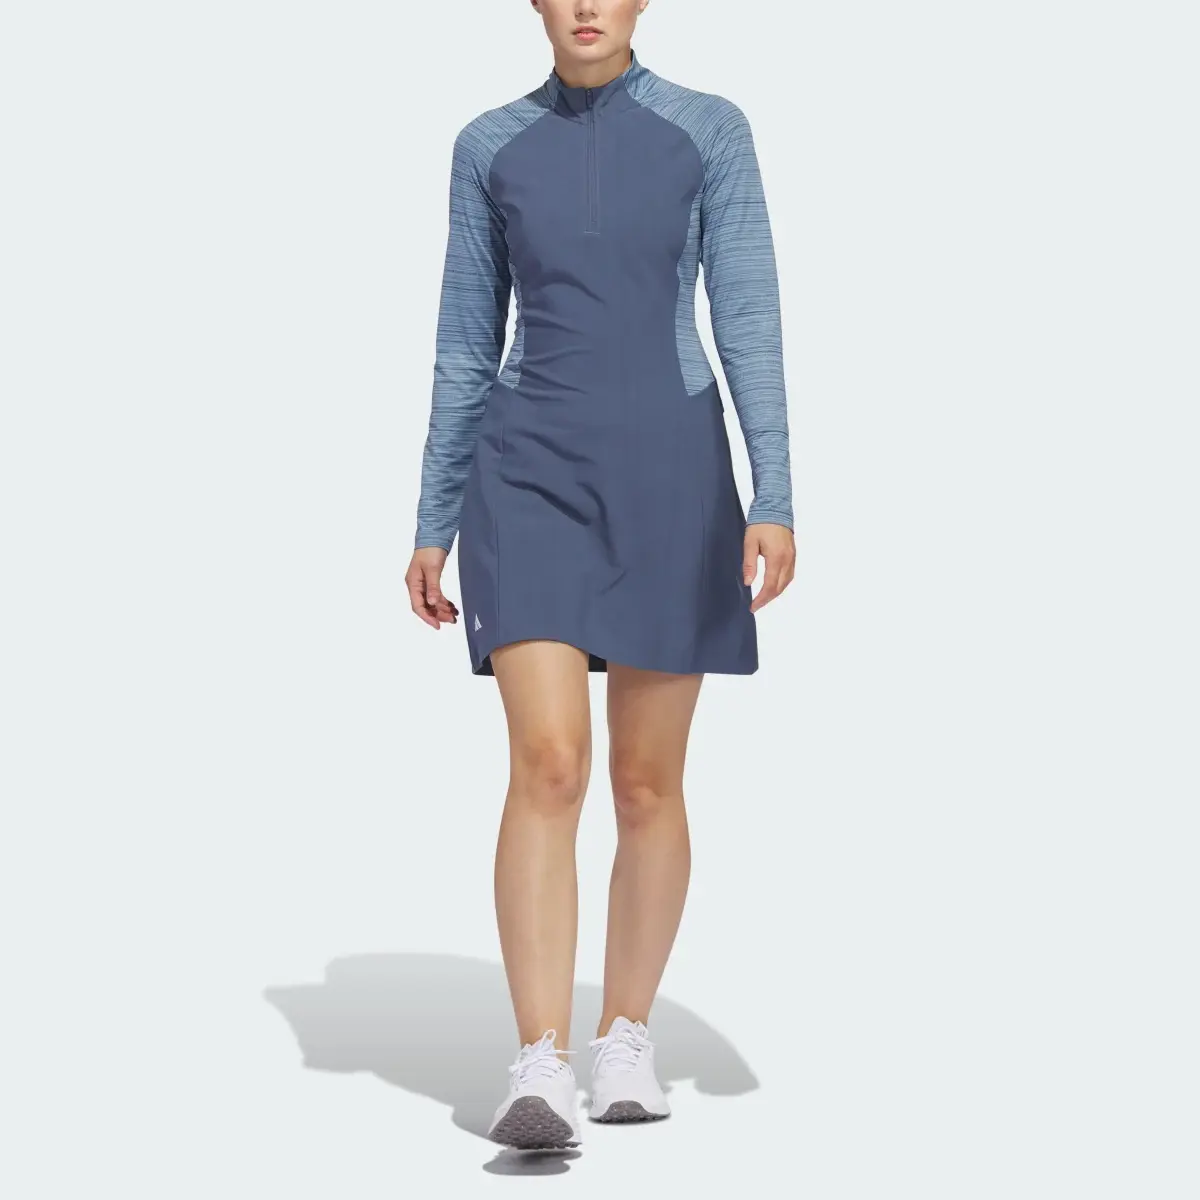 Adidas Ultimate365 Long Sleeve Dress. 1